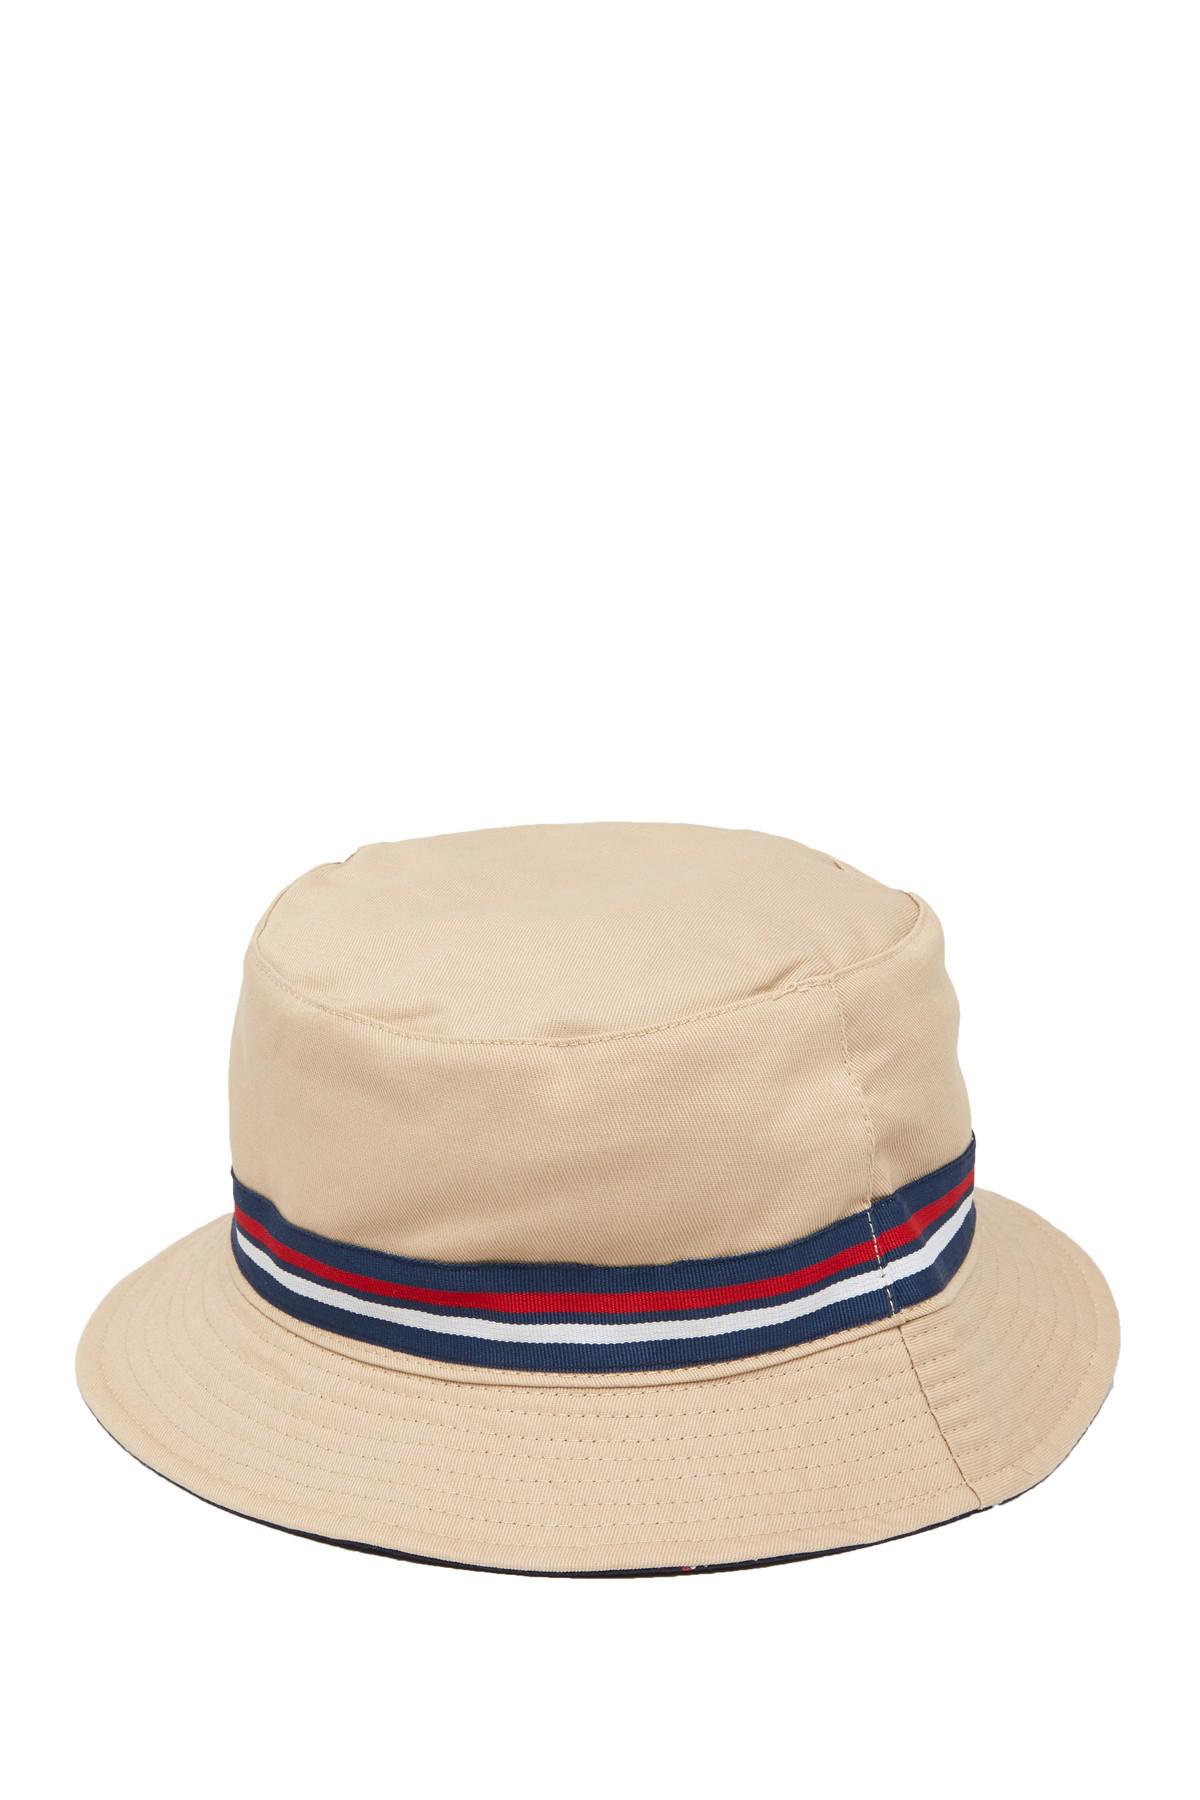 Fila Heritage Reversible Bucket Hat in Natural for Men | Lyst